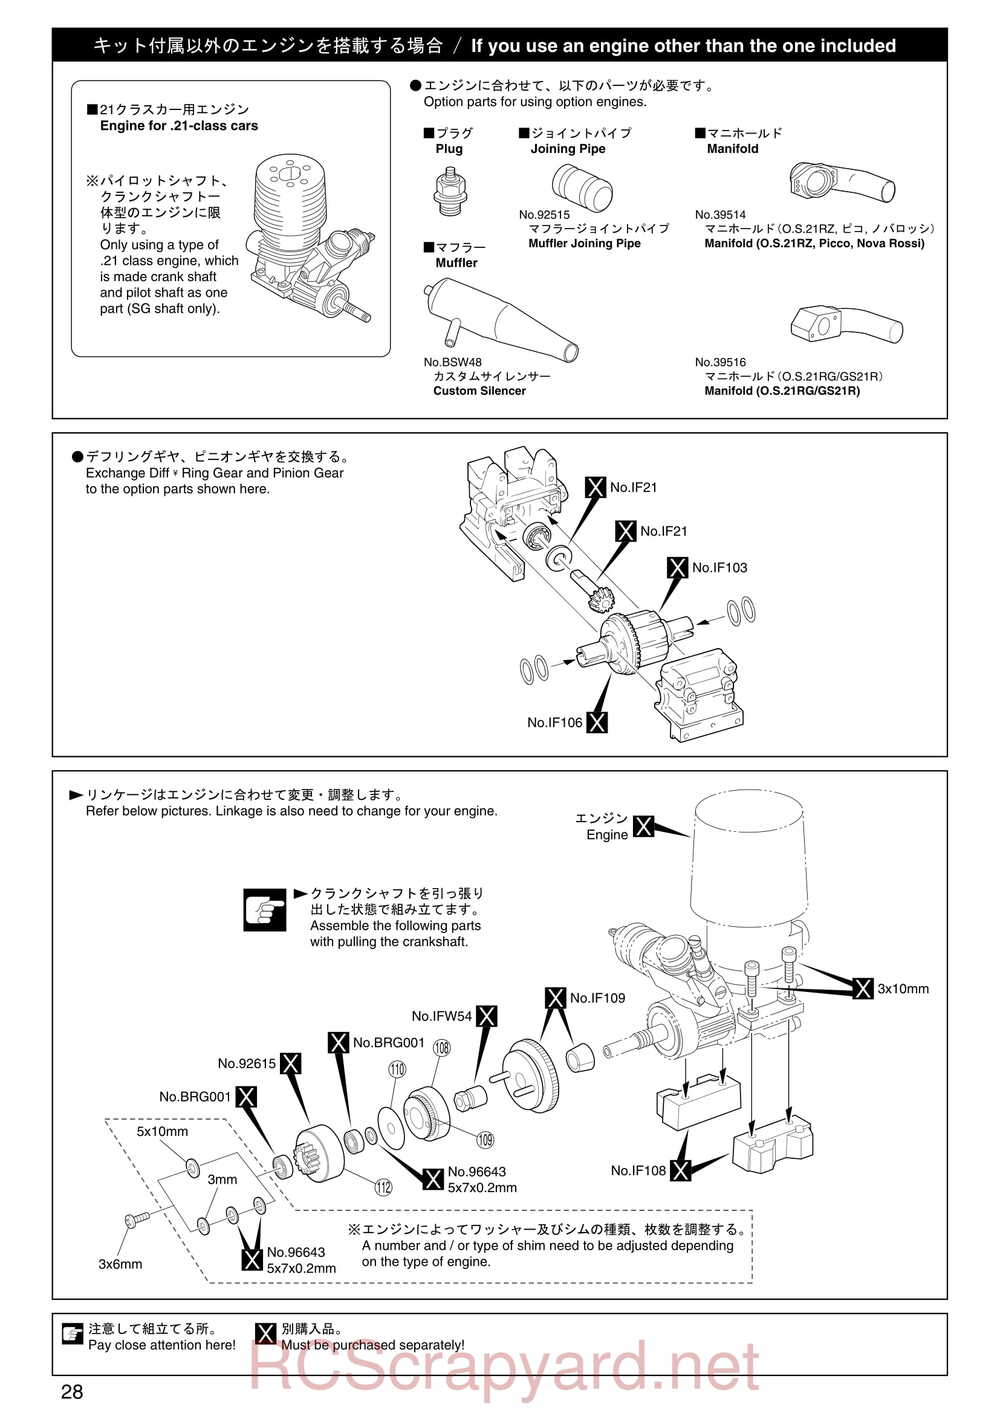 Kyosho - 31192 - Inferno-MP-7-5 Sports - Manual - Page 28